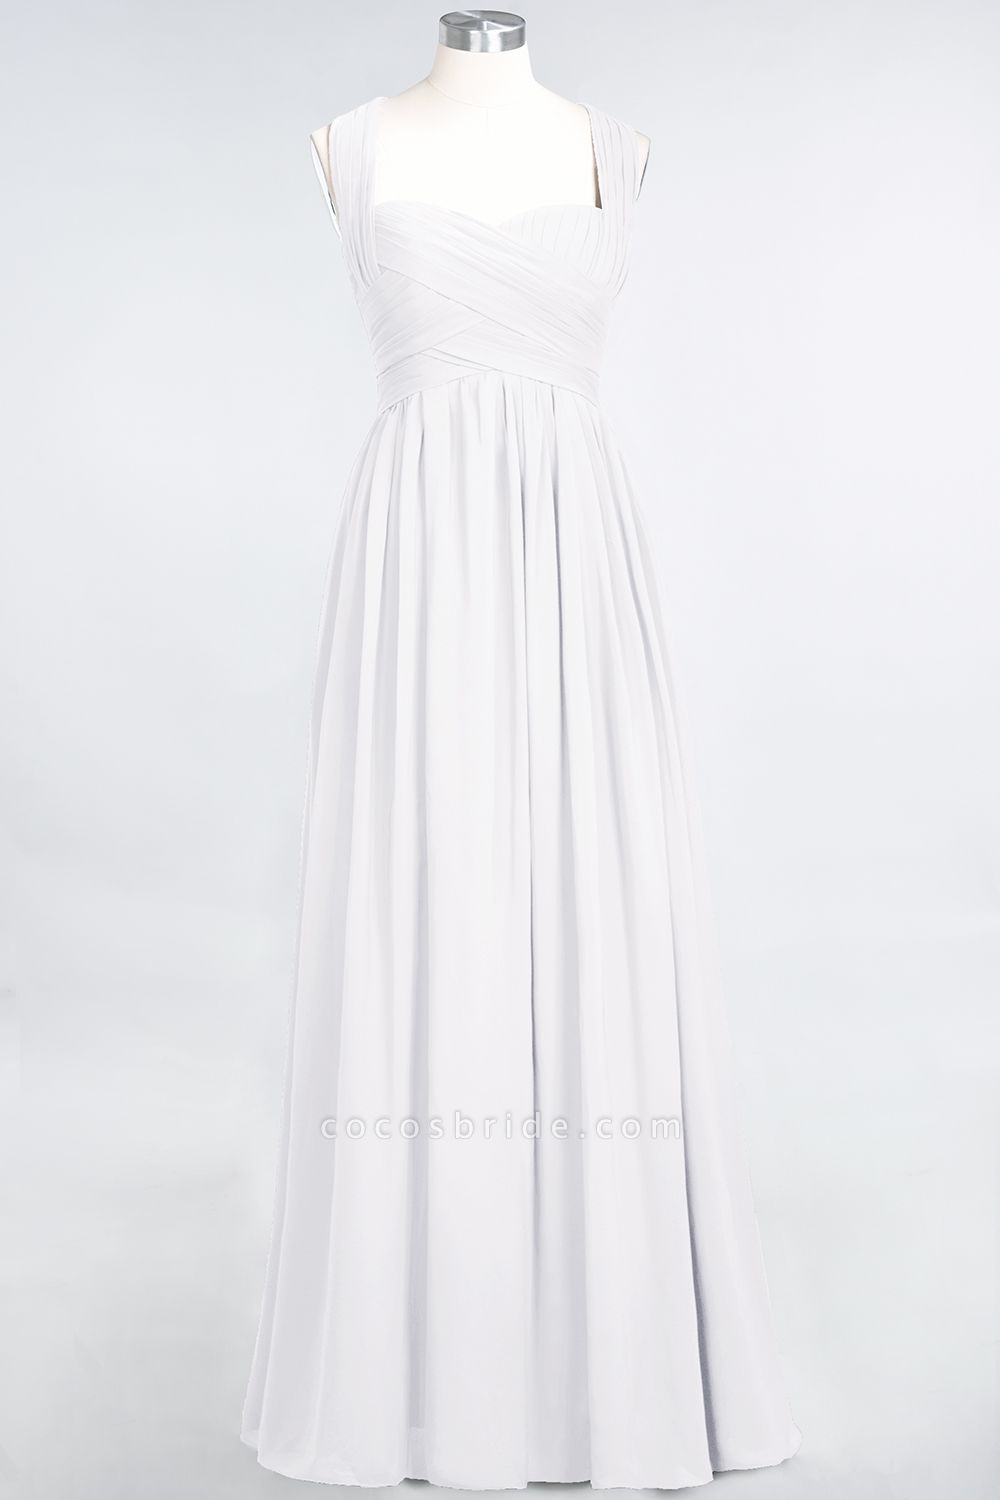 BM0420 Burgundy Simple Cap Sleeves Sweetheart Bridesmaid Dress